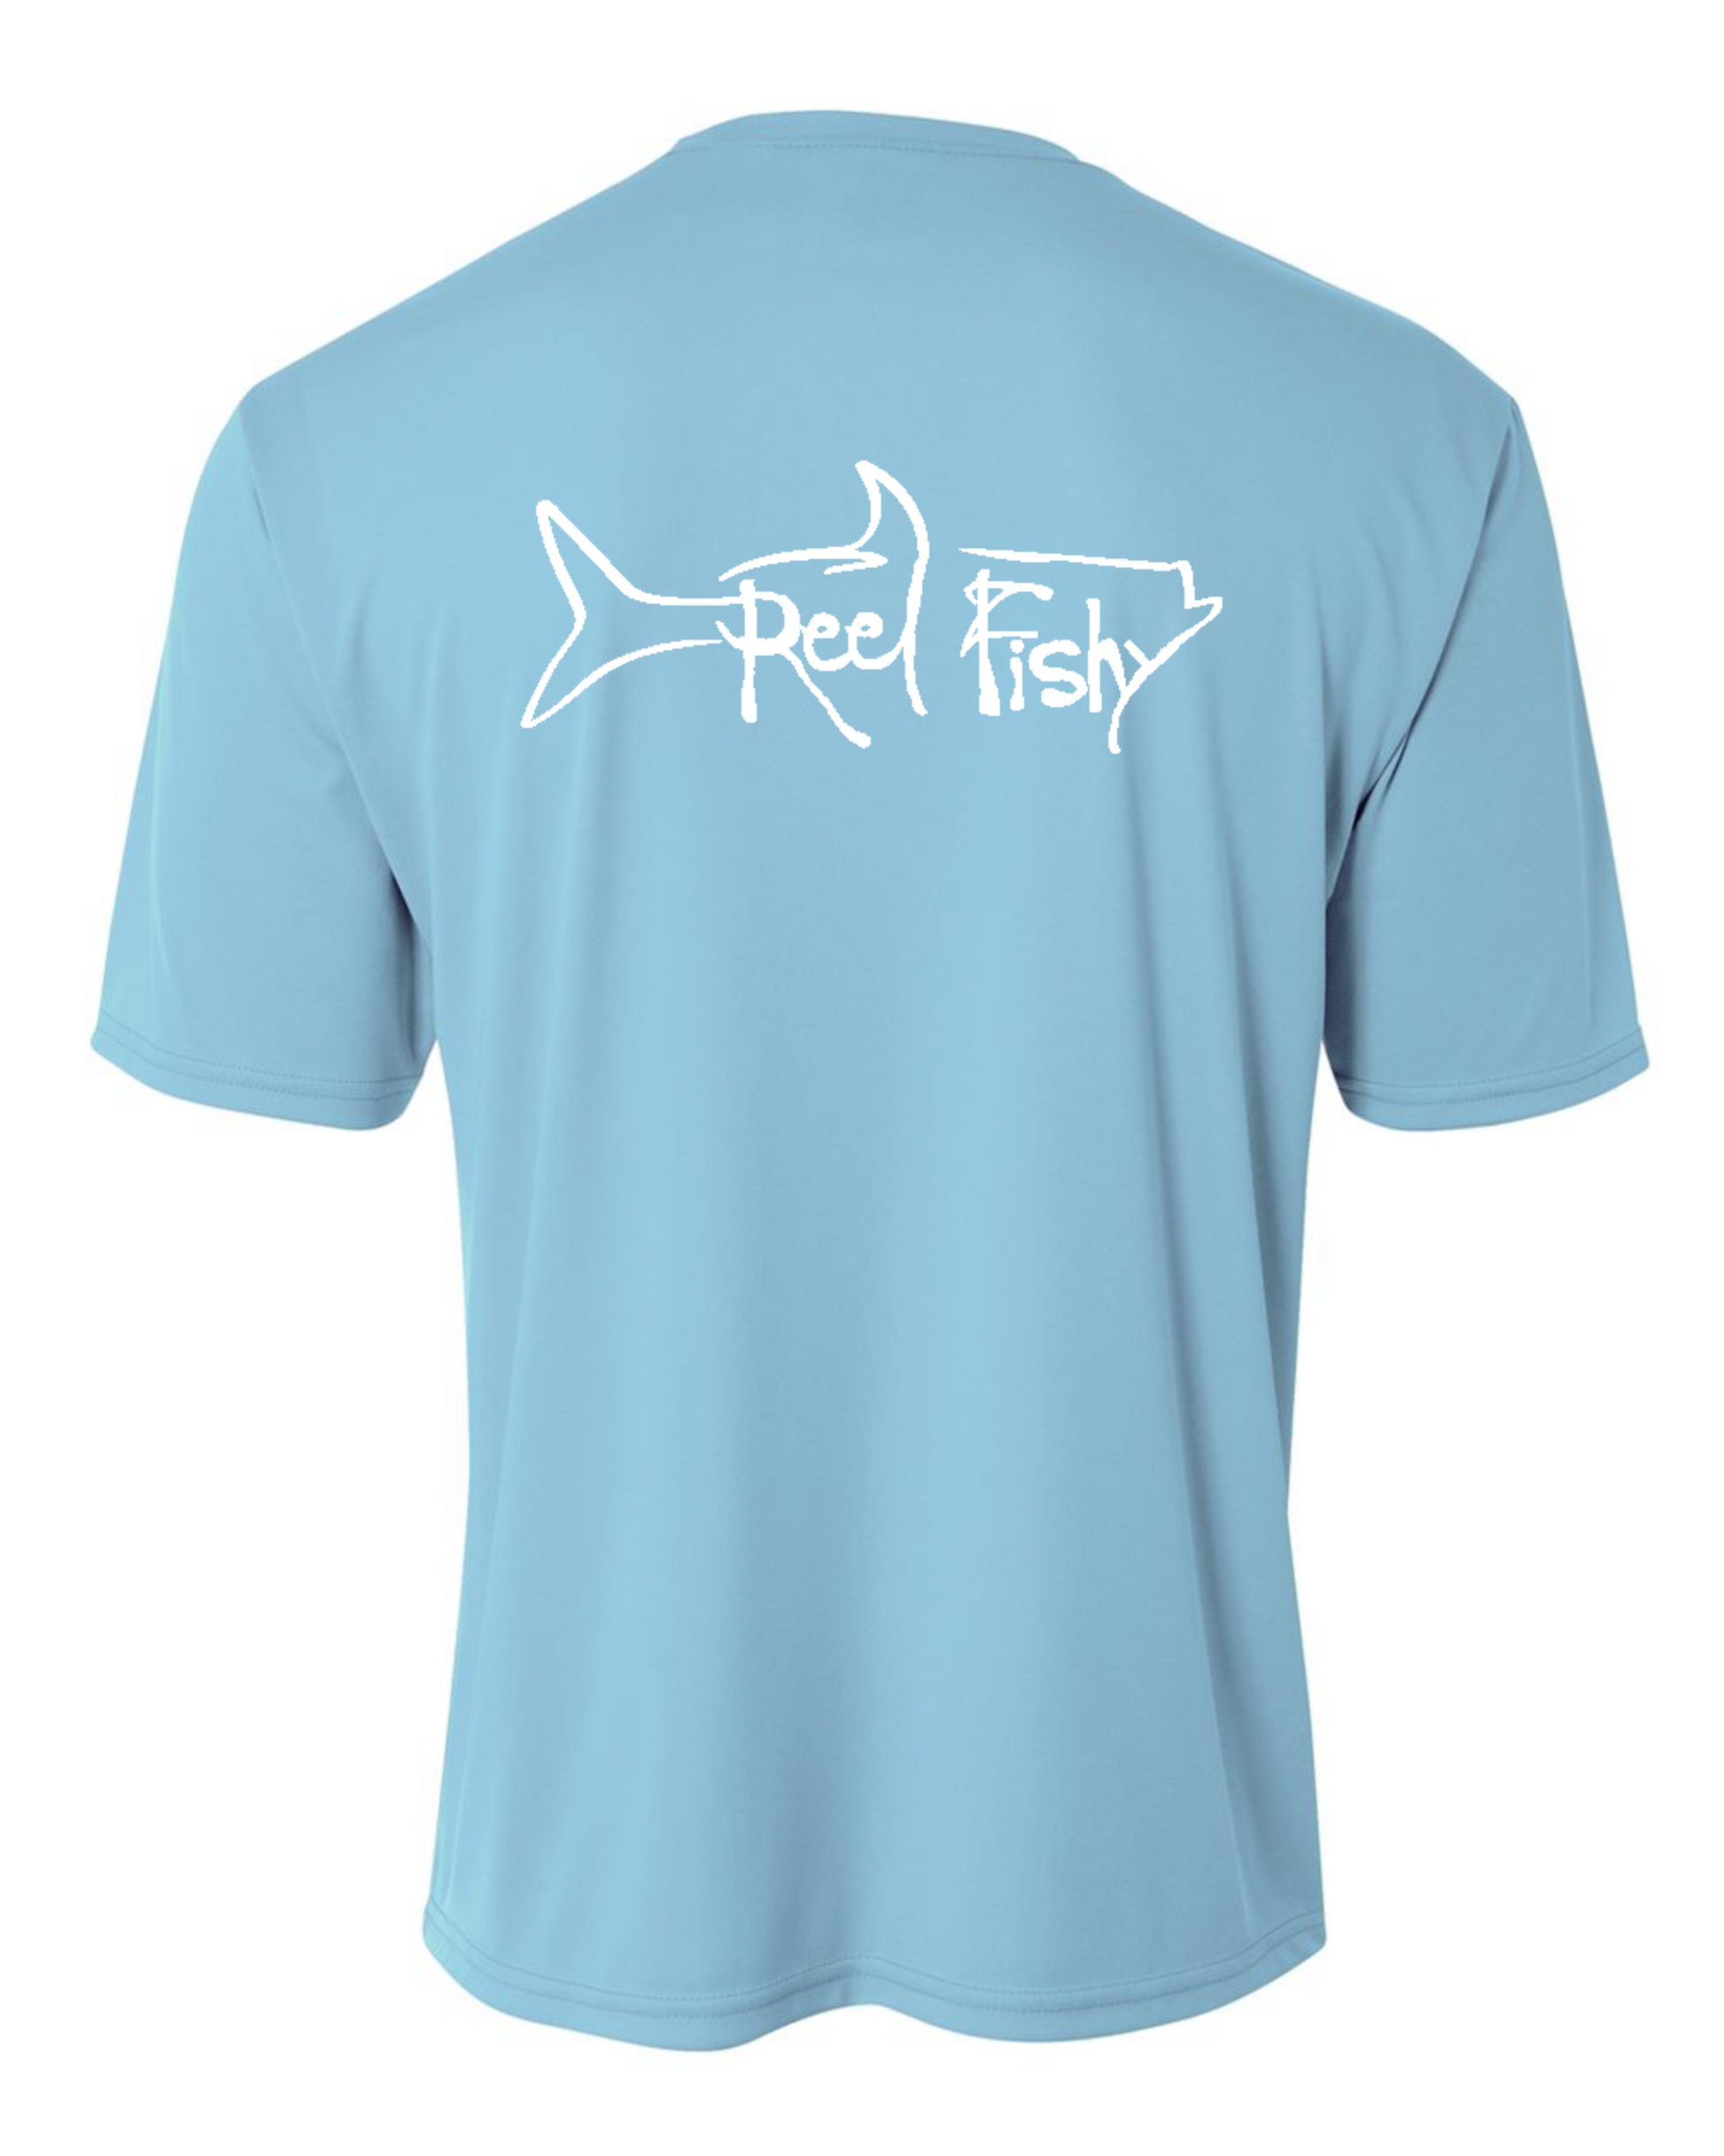 Men's Tarpon Territory Fishing Shirt